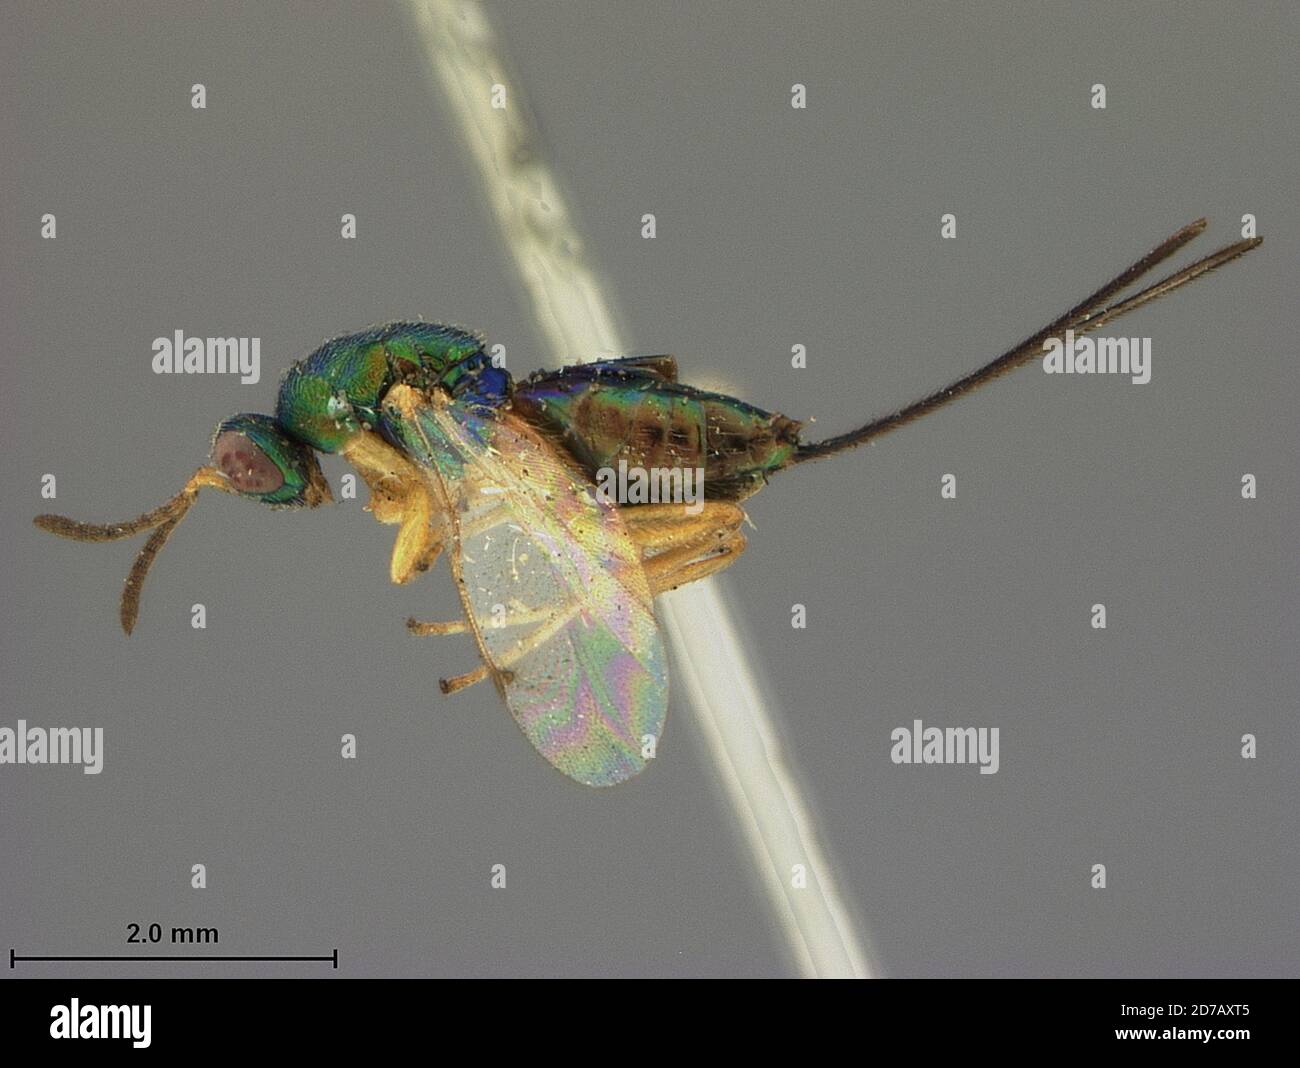 Riley, Kansas, United States, Monodontomerus pachypsyllae Ashmead, 1888, Animalia, Arthropoda, Insecta, Hymenoptera, Torymidae Stock Photo